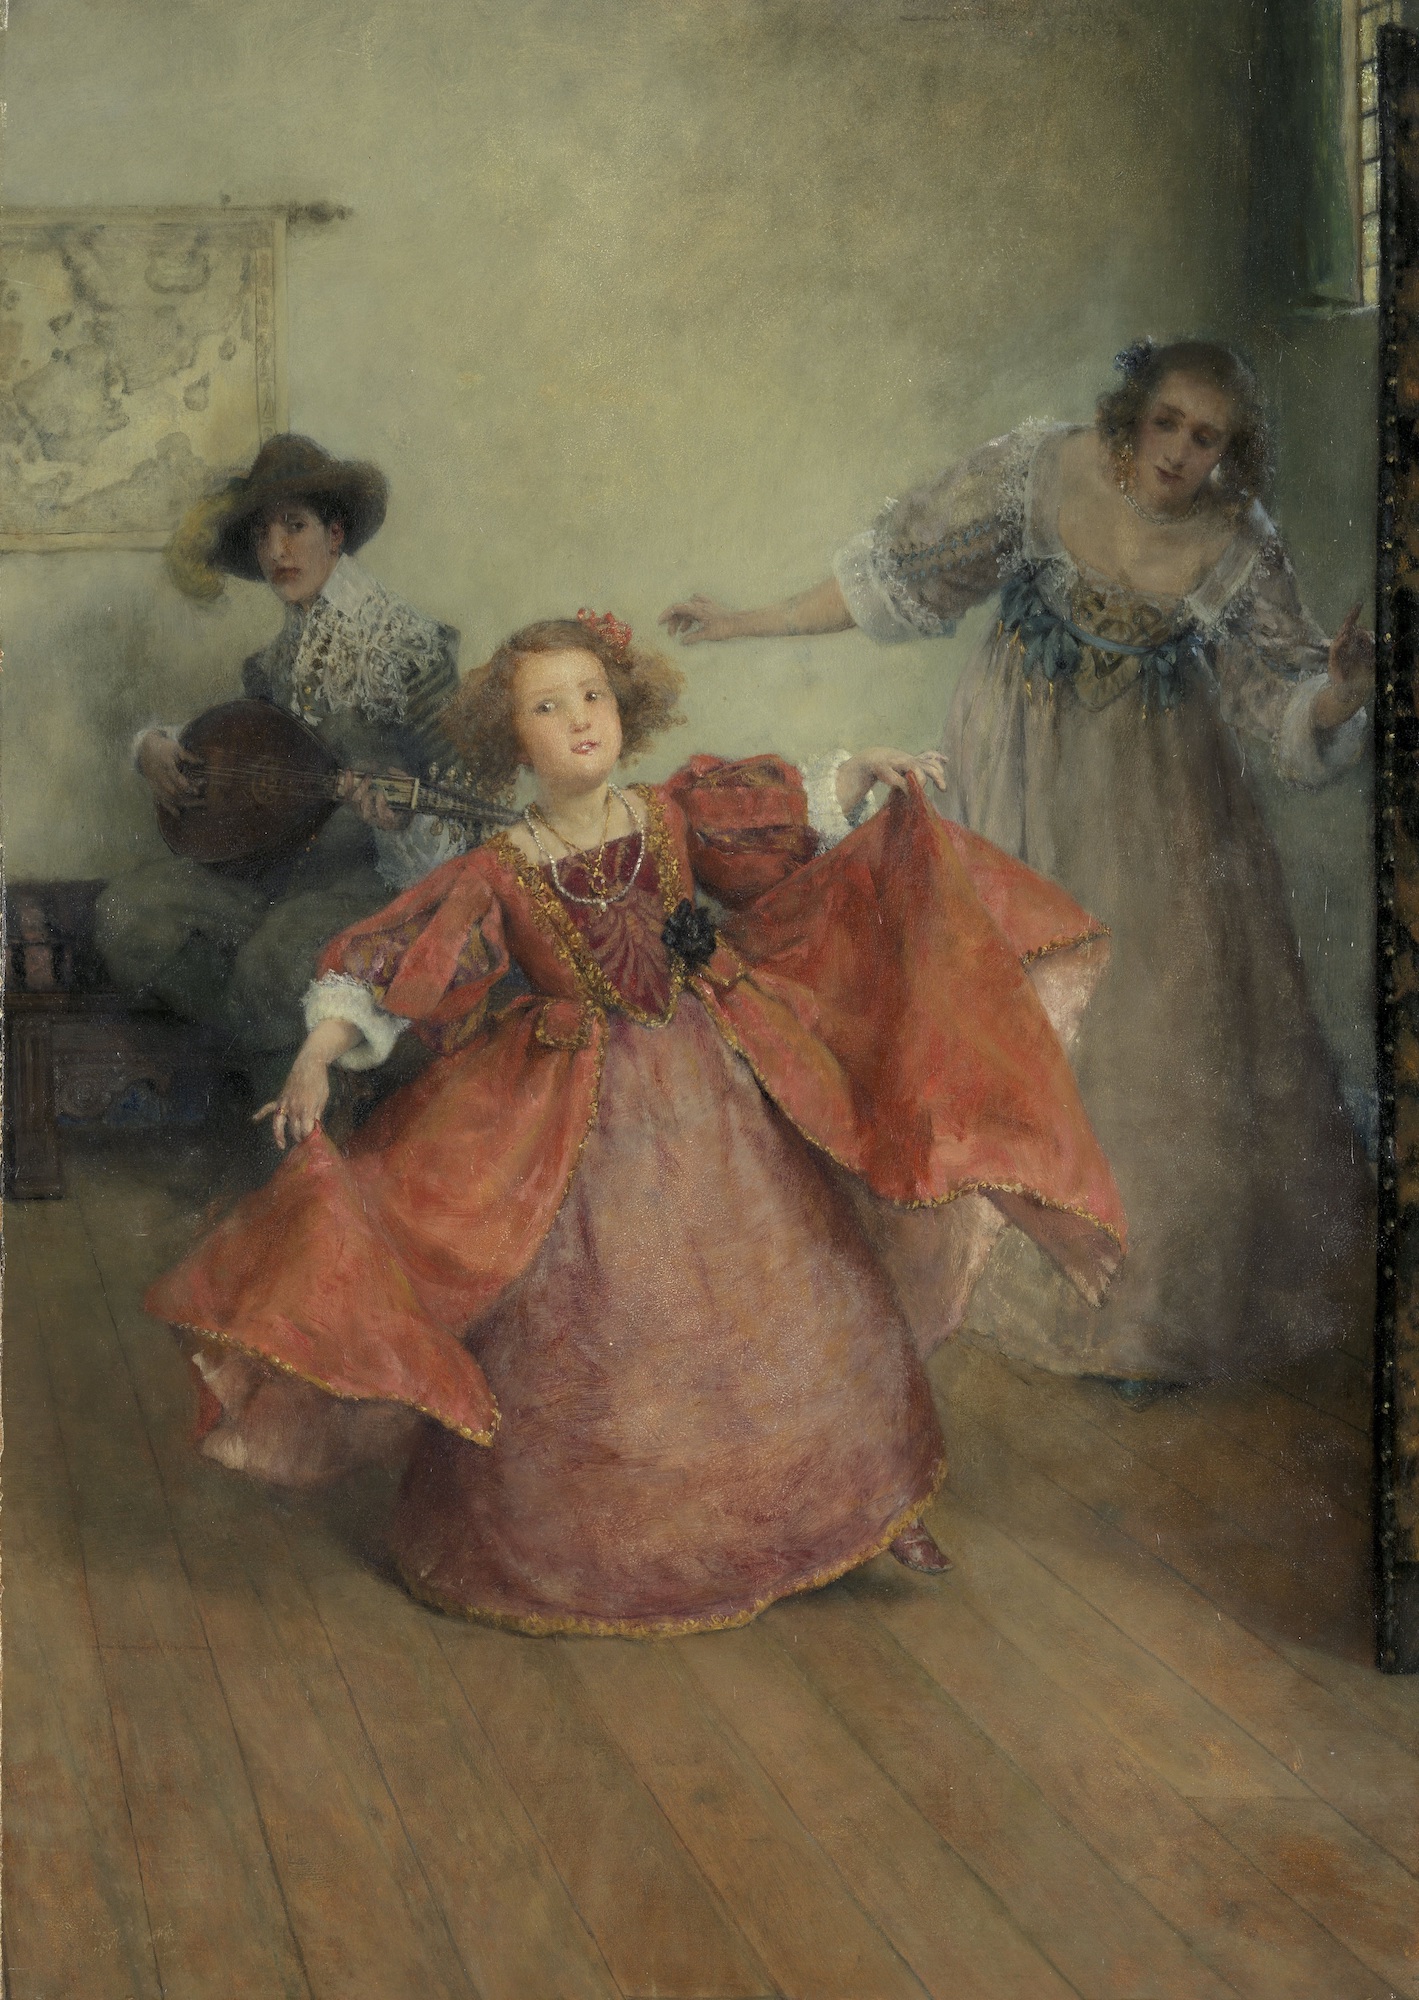 Laura Theresa Alma Tadema - 16 April 1852 - 15 August 1909